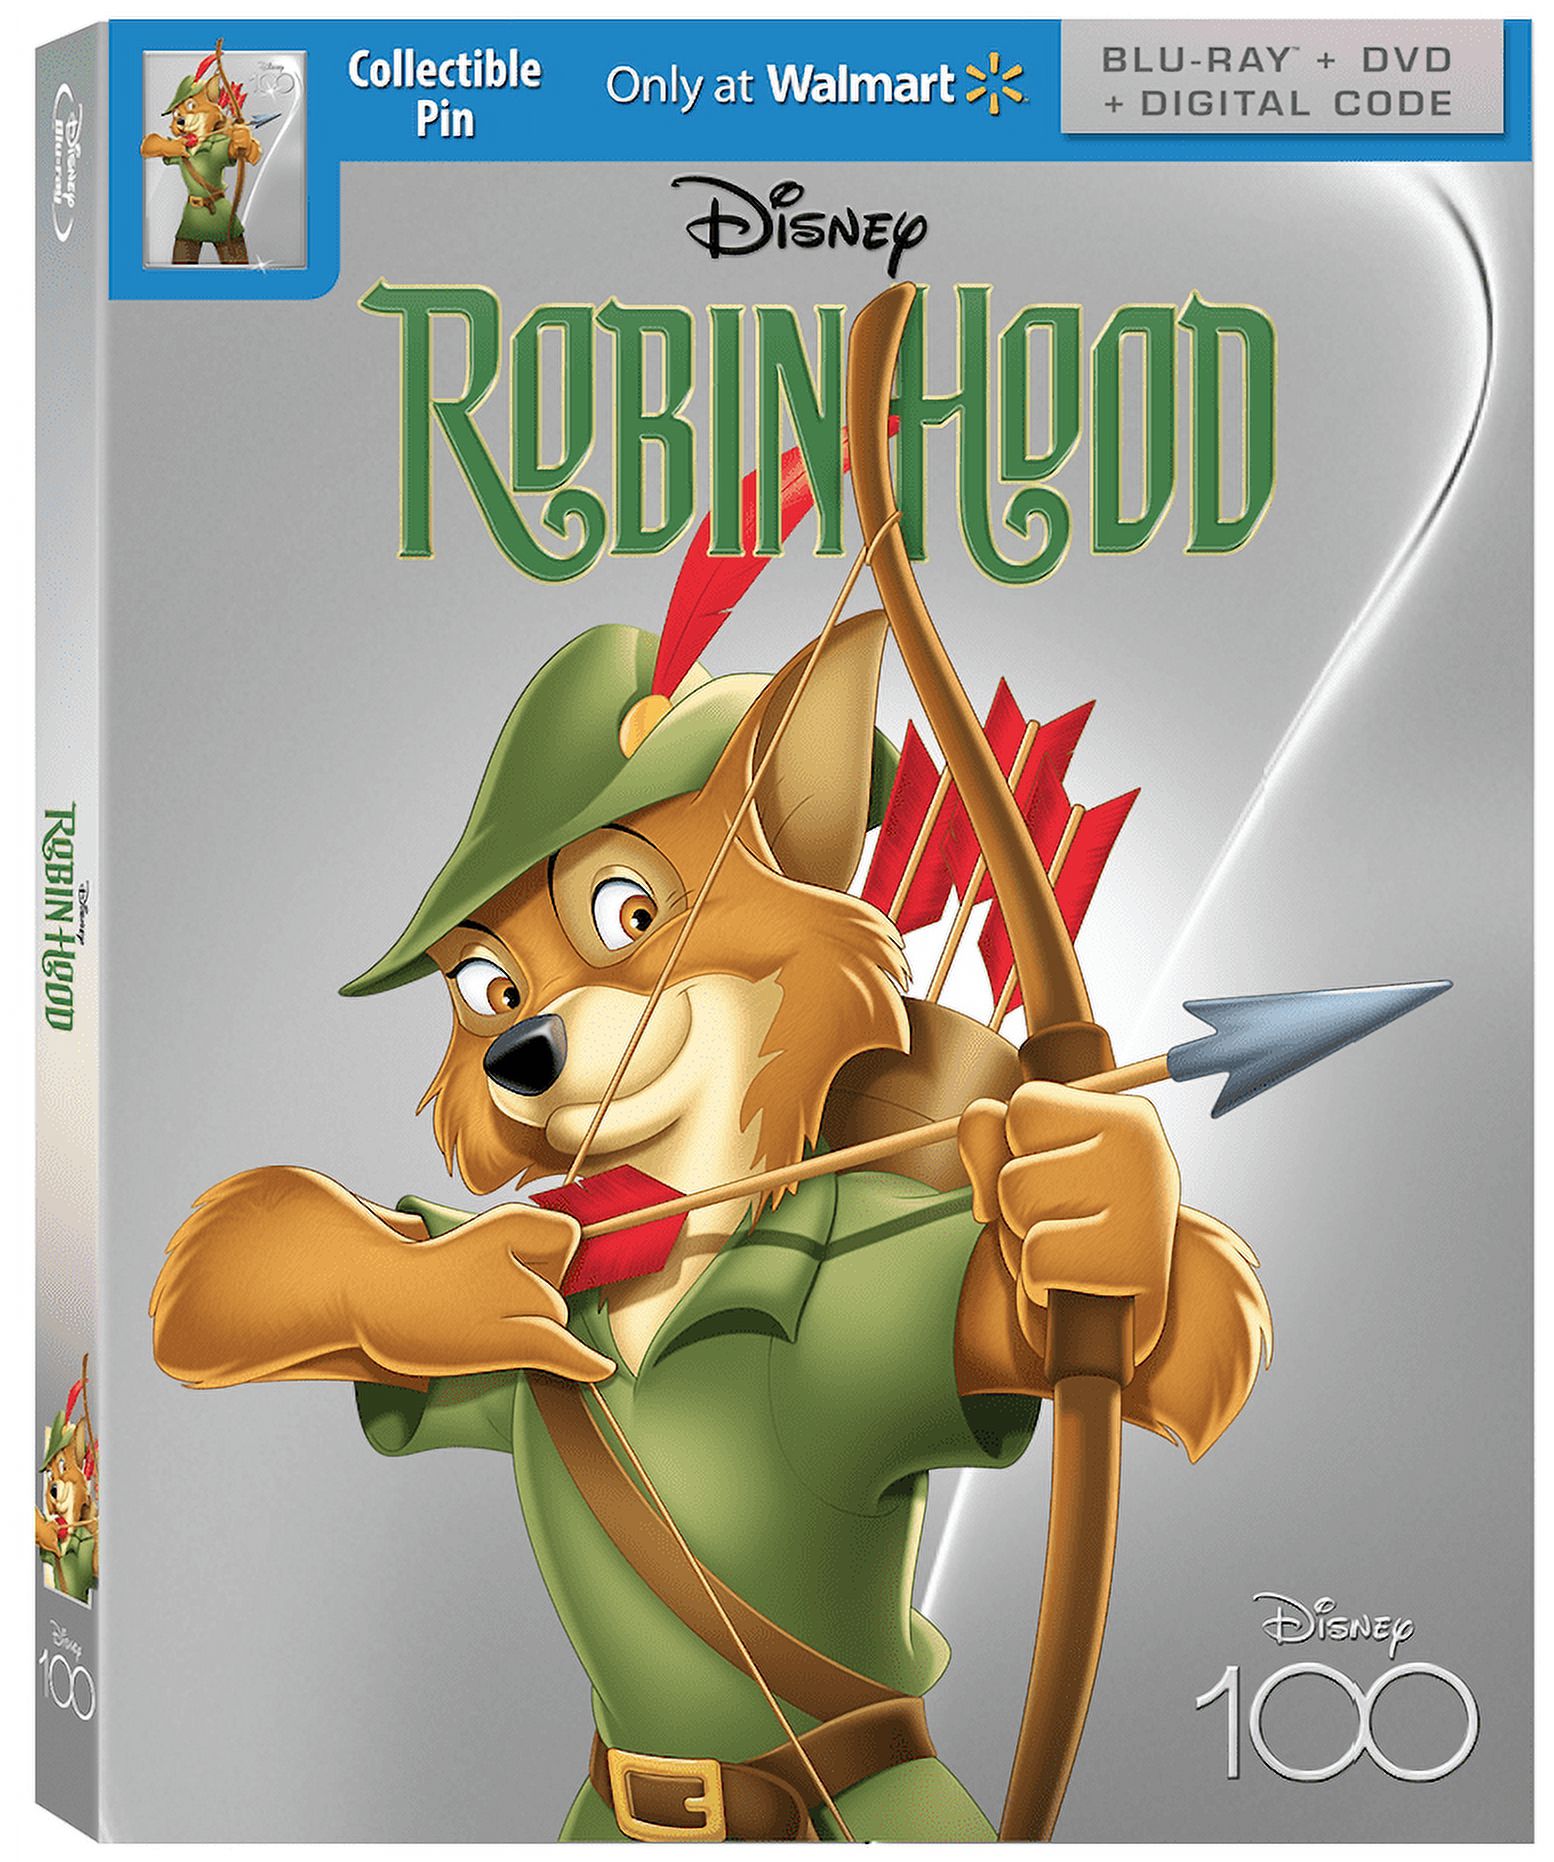 Robin Hood - Disney100 Edition Walmart Exclusive (Blu-ray + DVD + Digital Code) - image 1 of 11